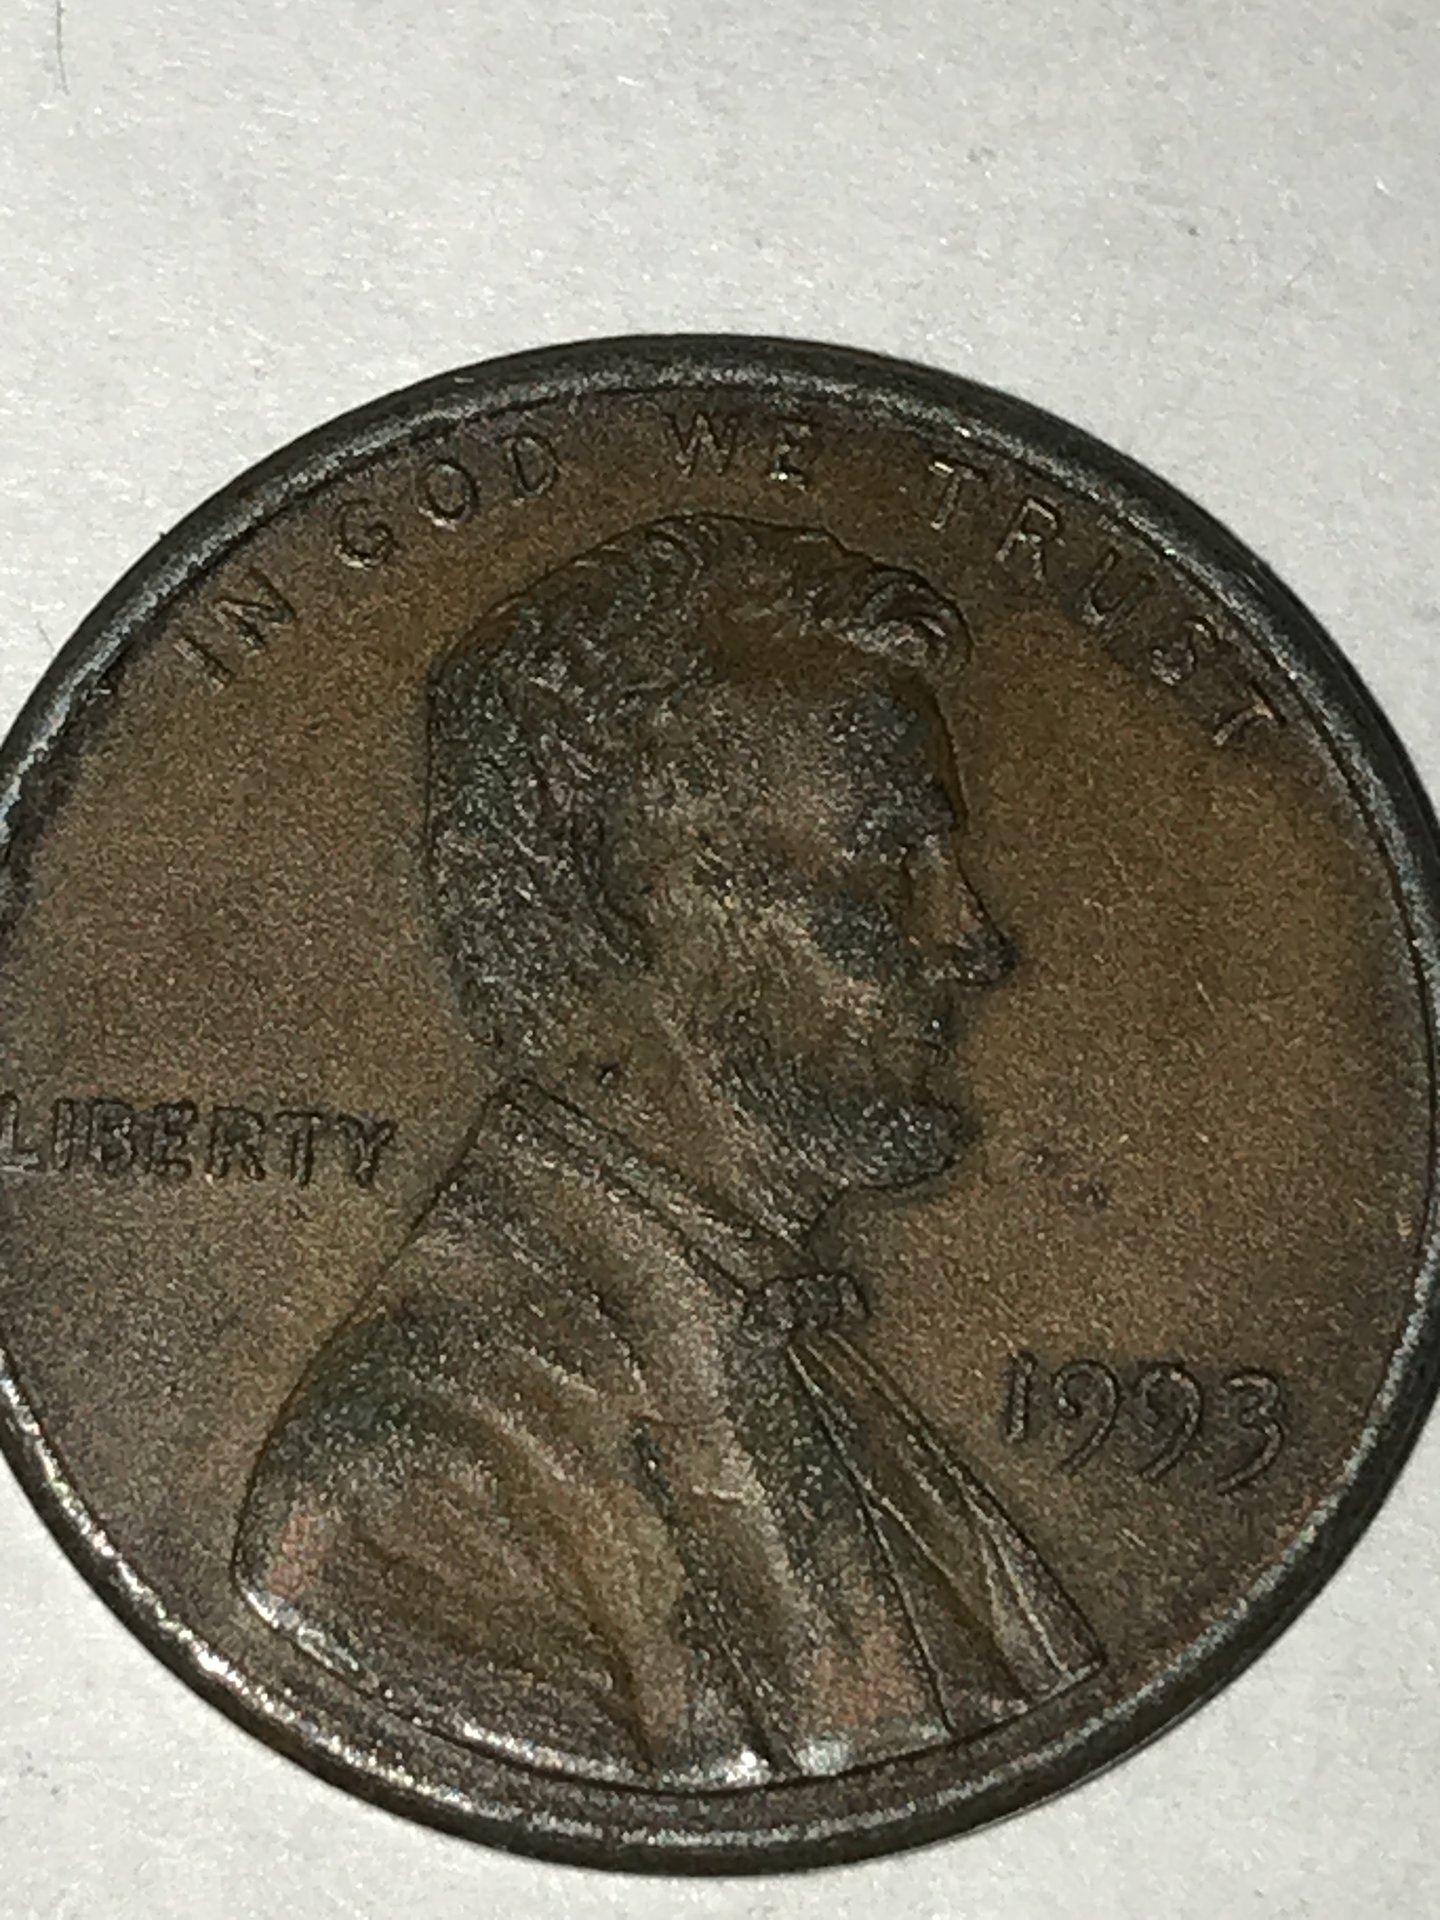 Penny Oddities | Coin Talk